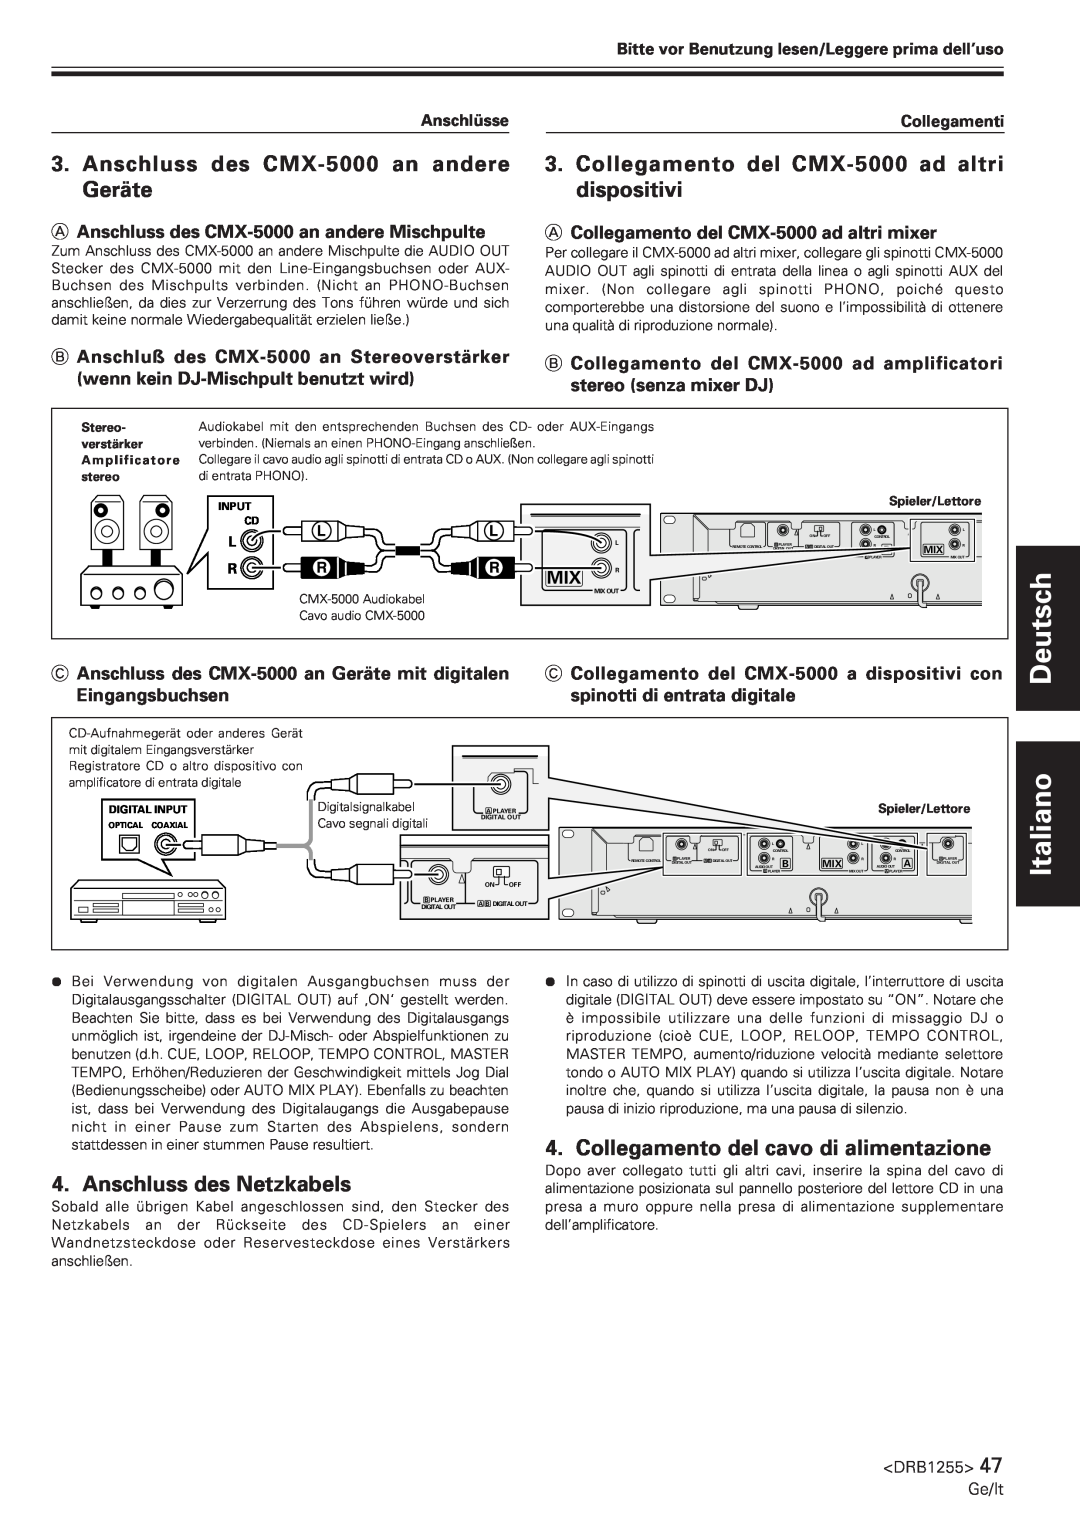 Pioneer manual Deutsch, Anschluss des CMX-5000an andere Geräte, Collegamento del CMX-5000ad altri dispositivi, Italiano 